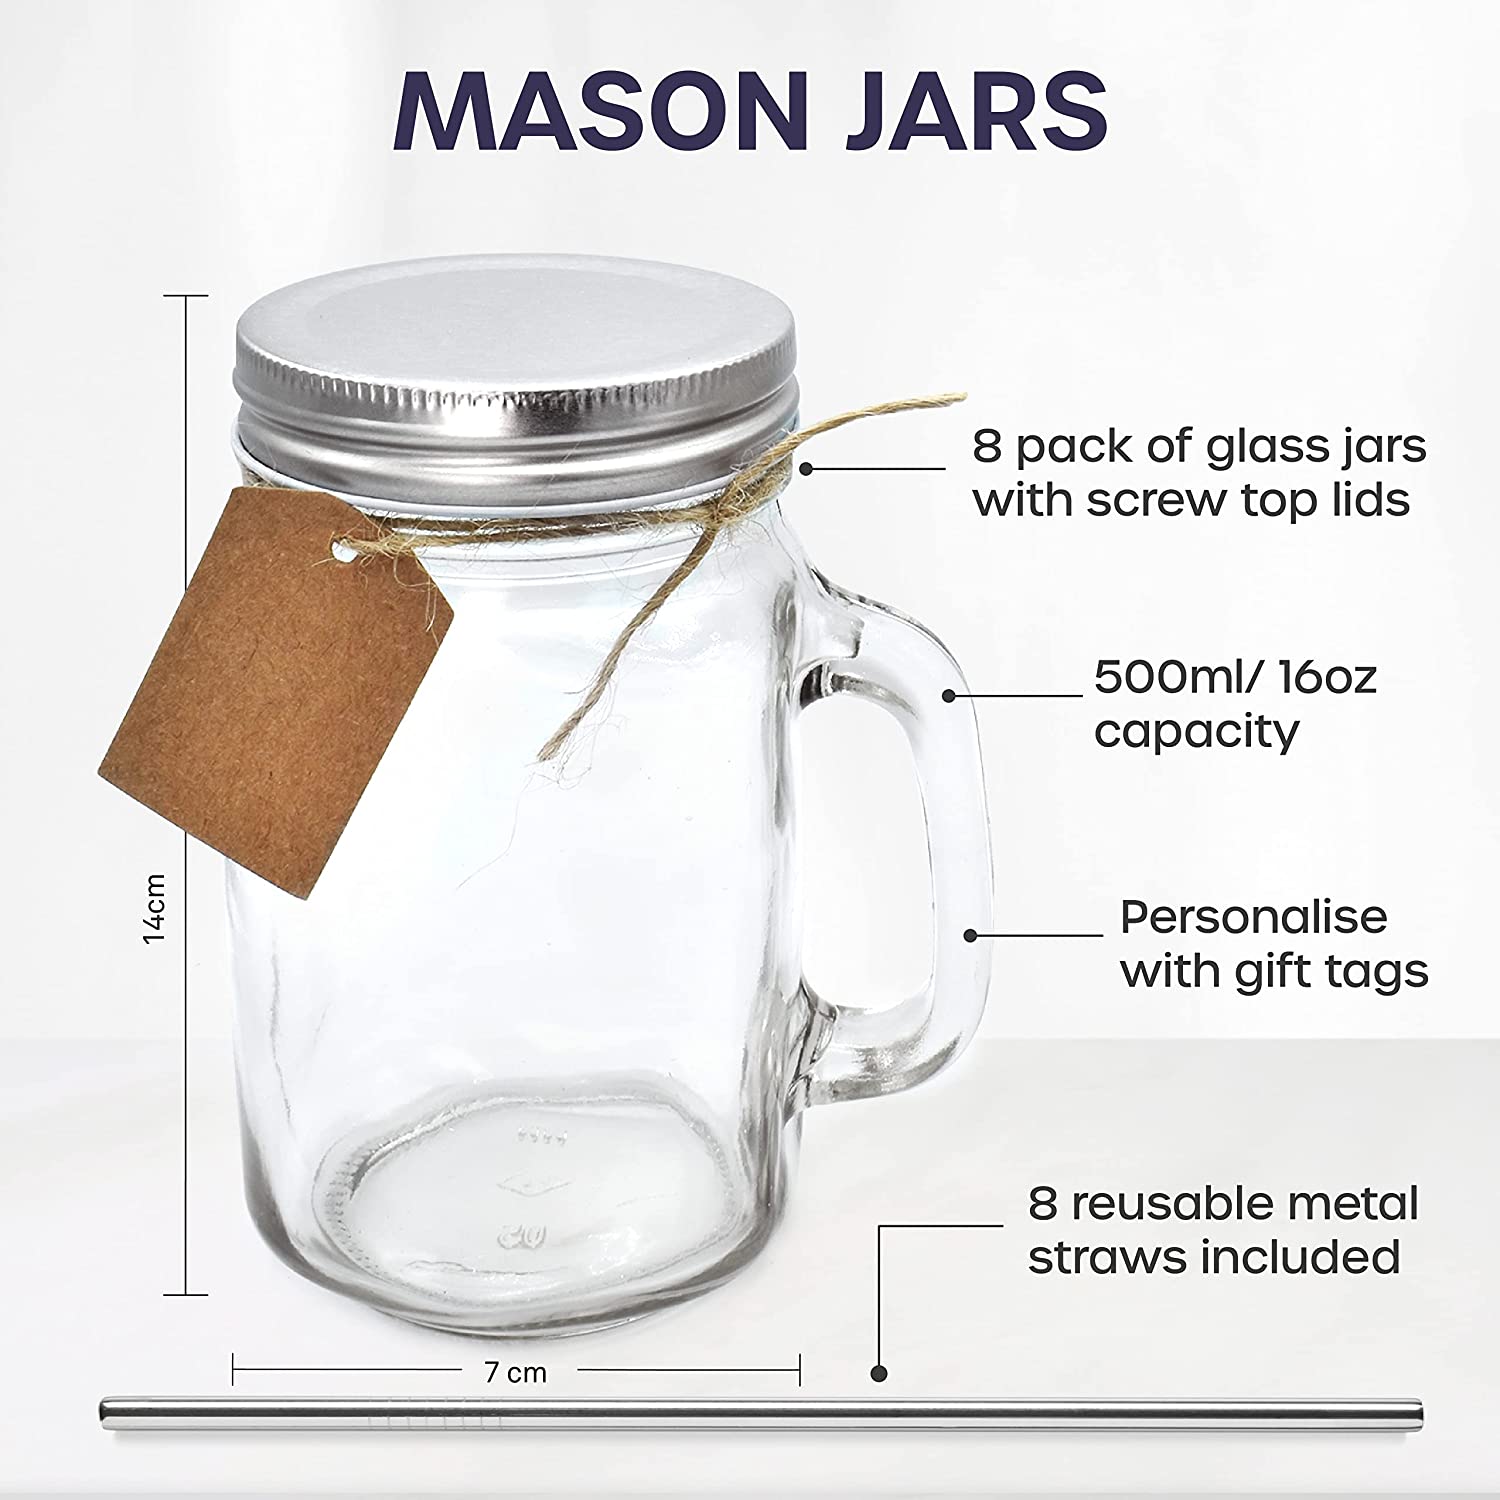 Mason Jars Product Features